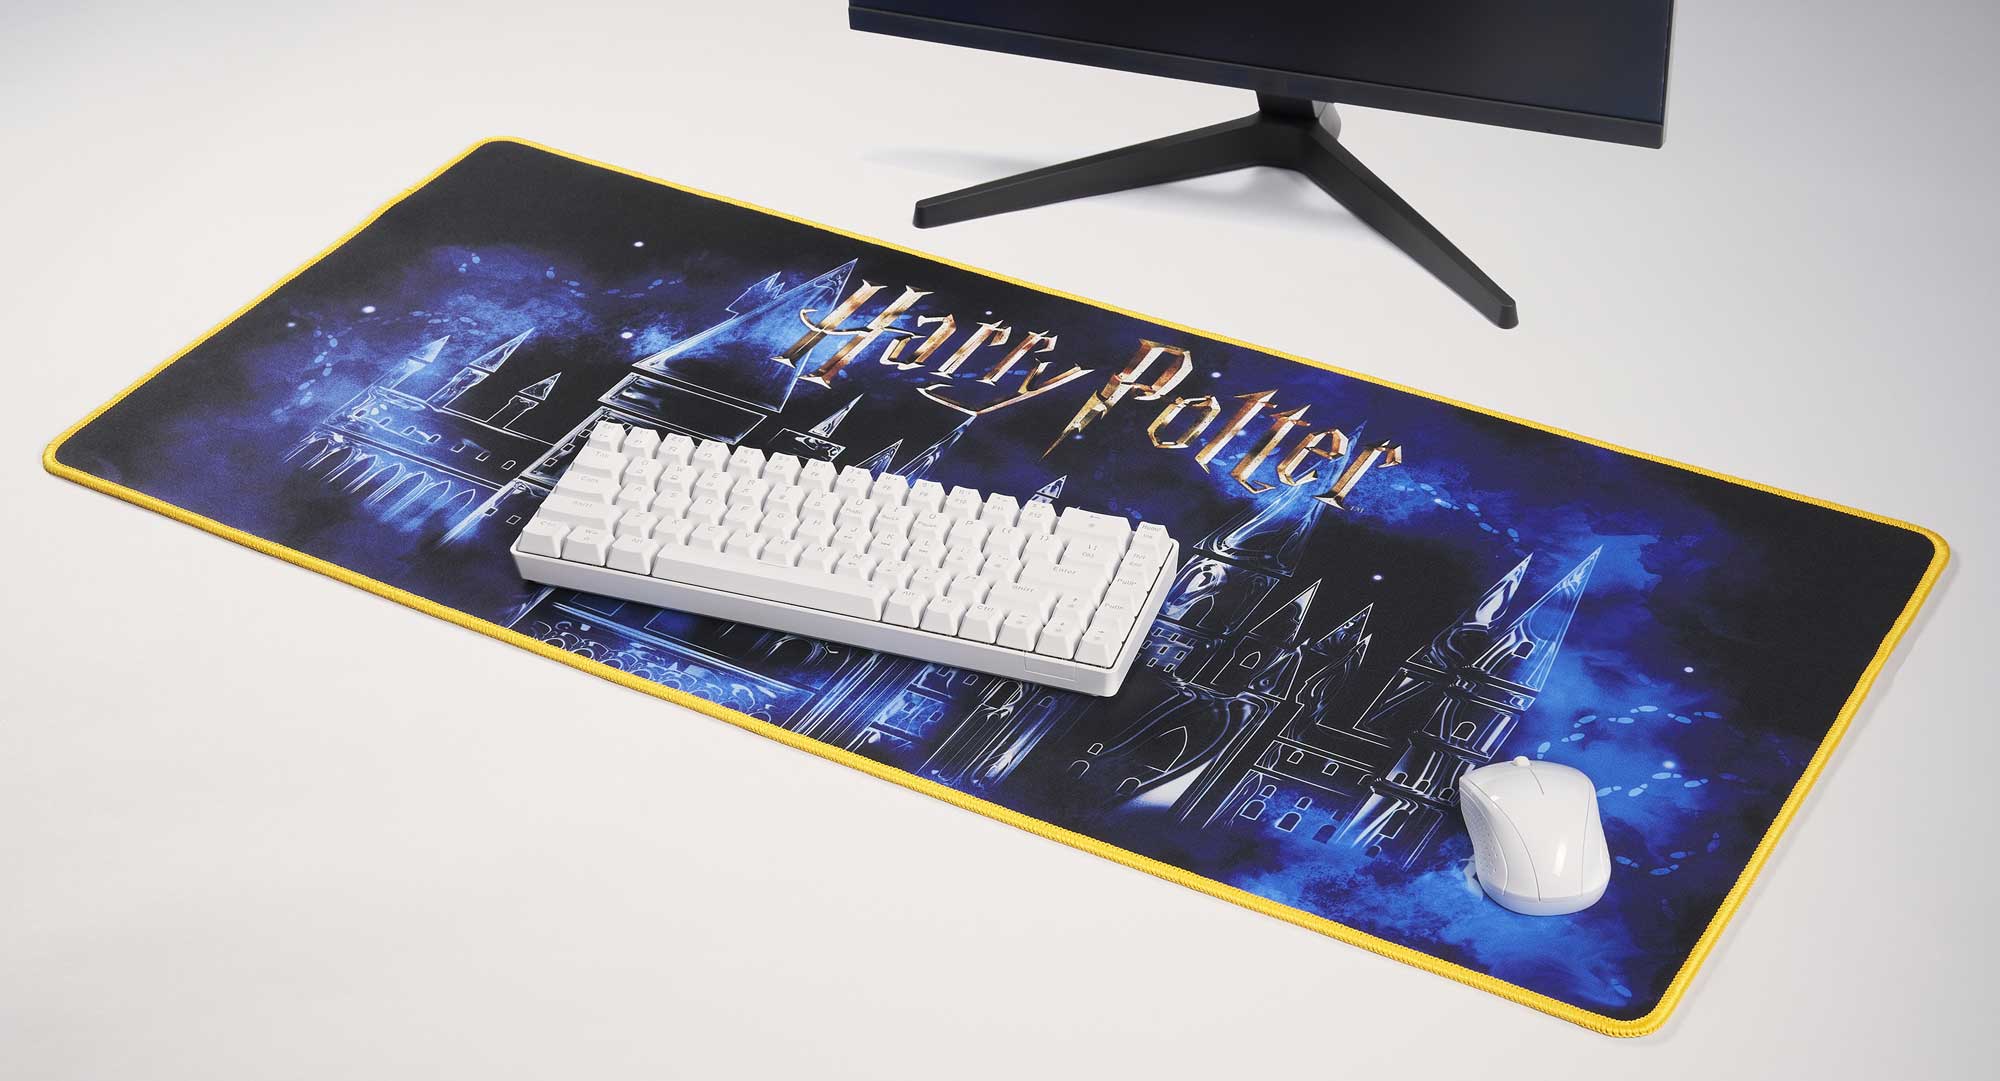 Tapis de bureau - Mouse pad XXL Harry Potter